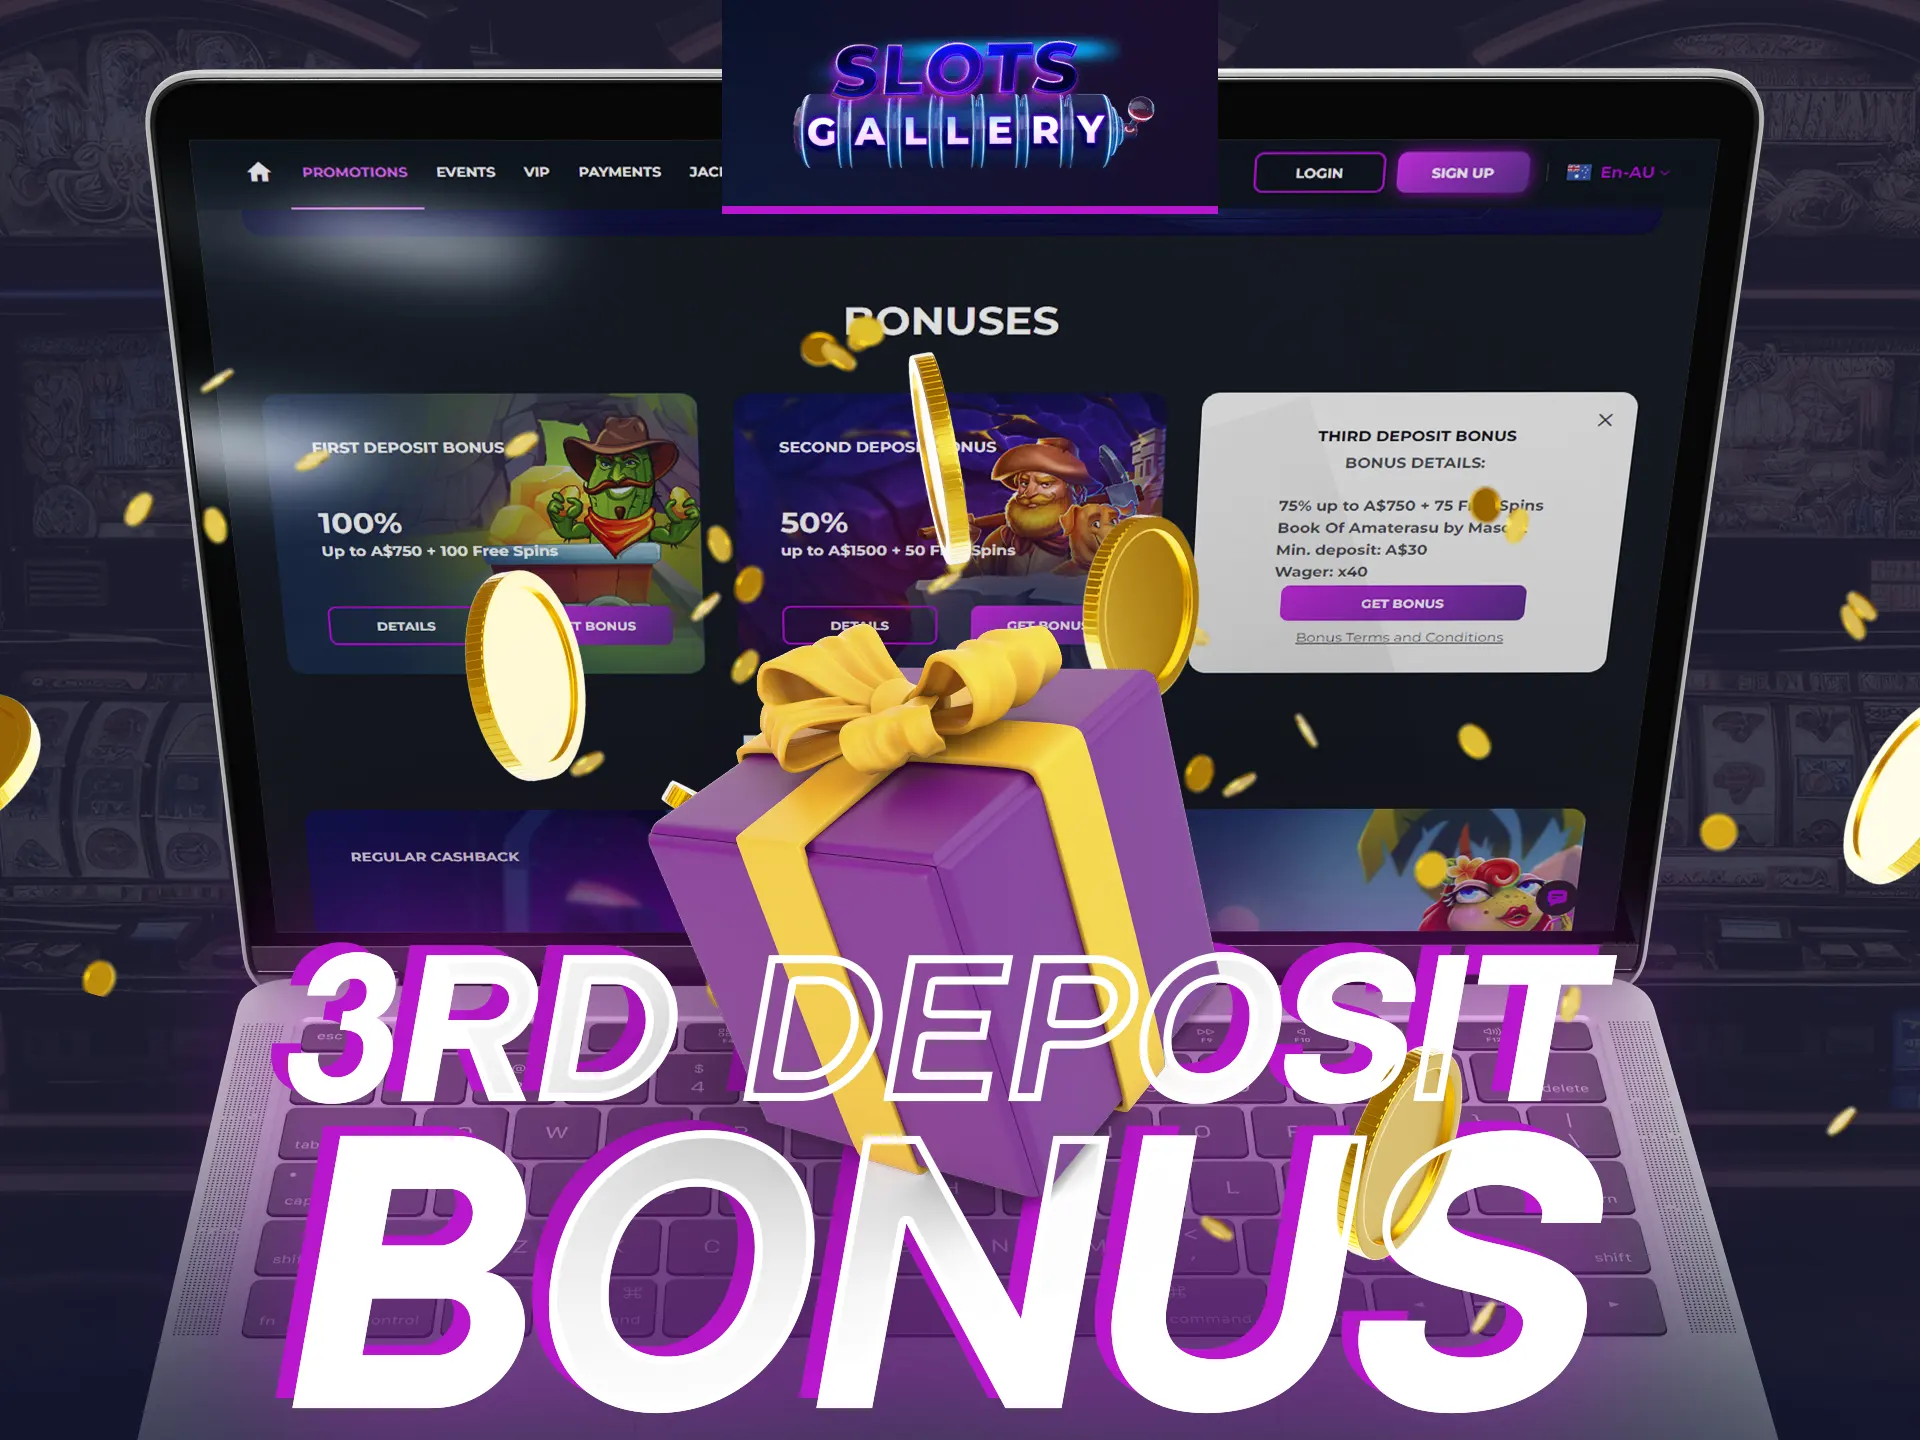 Get increased deposit and free spins with 3rd deposit bonus from Slots Gallery.